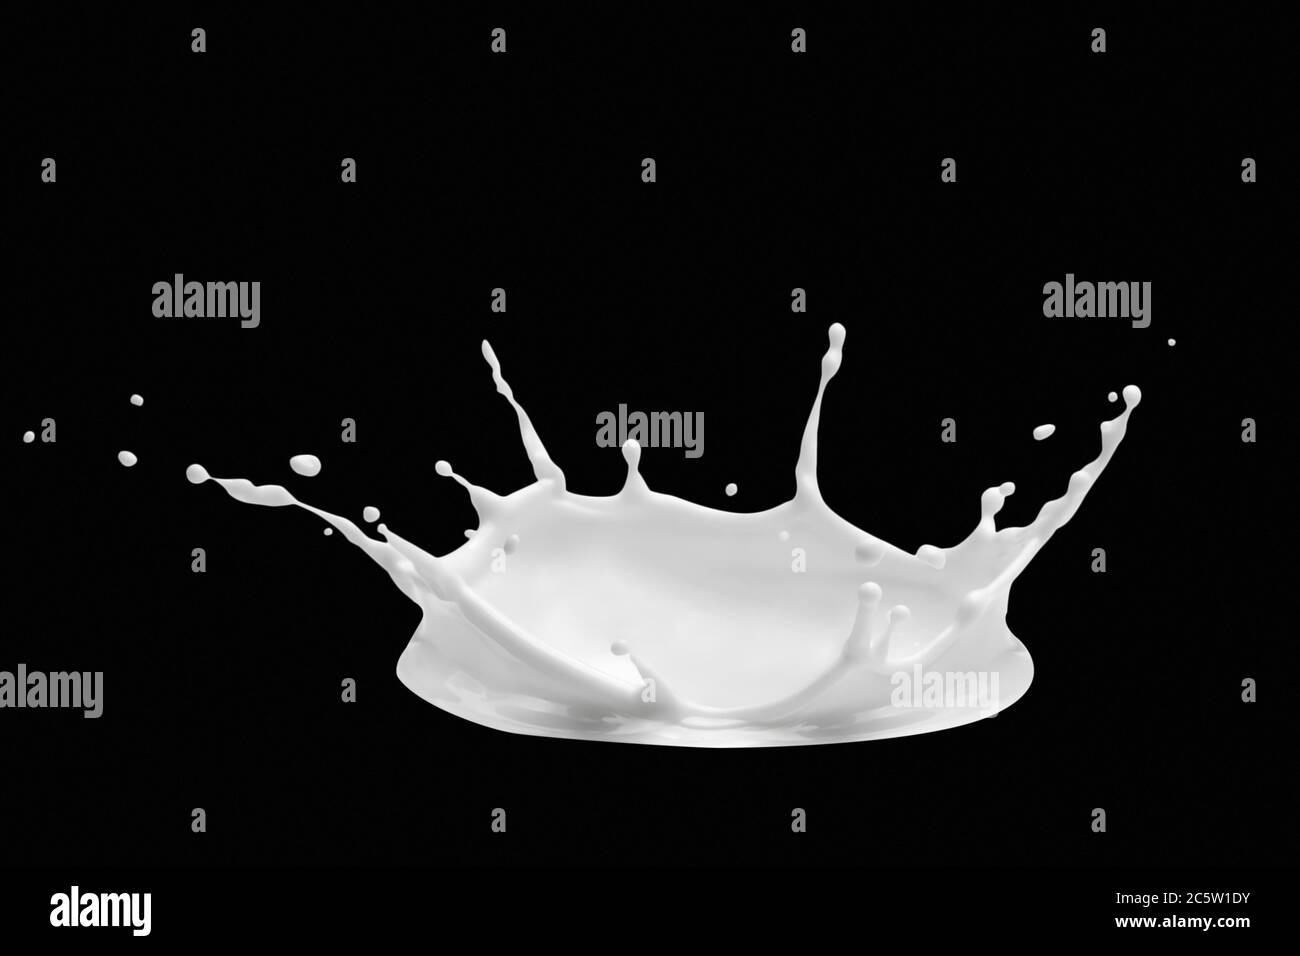 Splash Of Milk In The Form Of Milk Crown Milk Pouring Splash Isolated On Black Background Stock